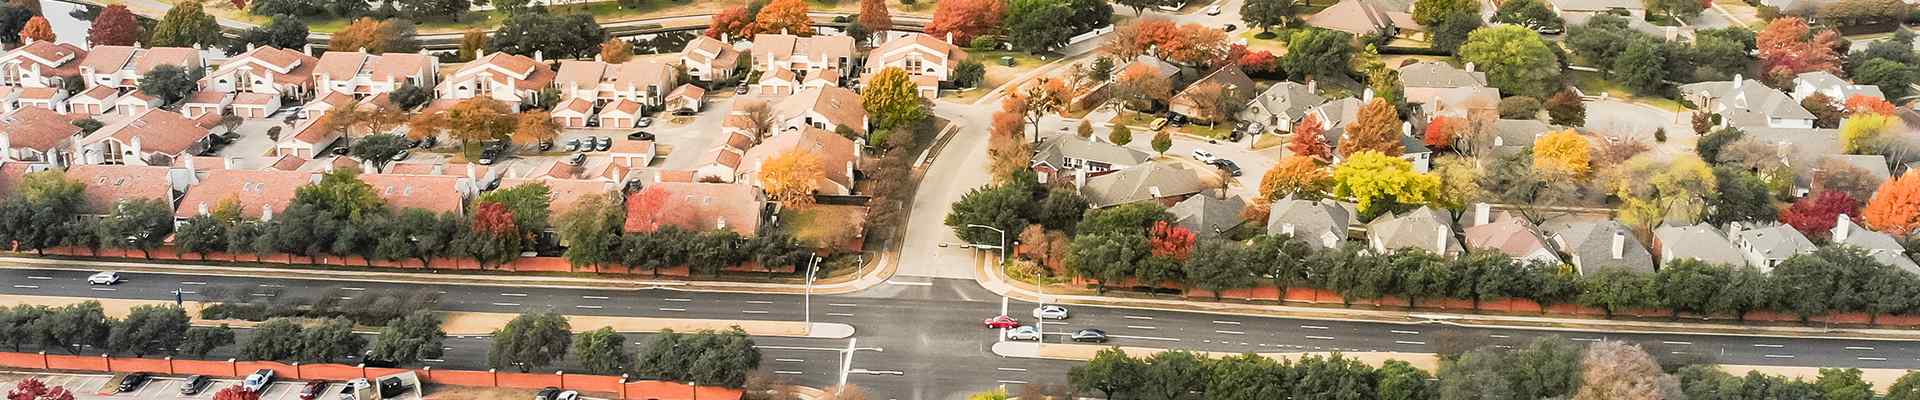 a suburban neighborhood in richland hills texas